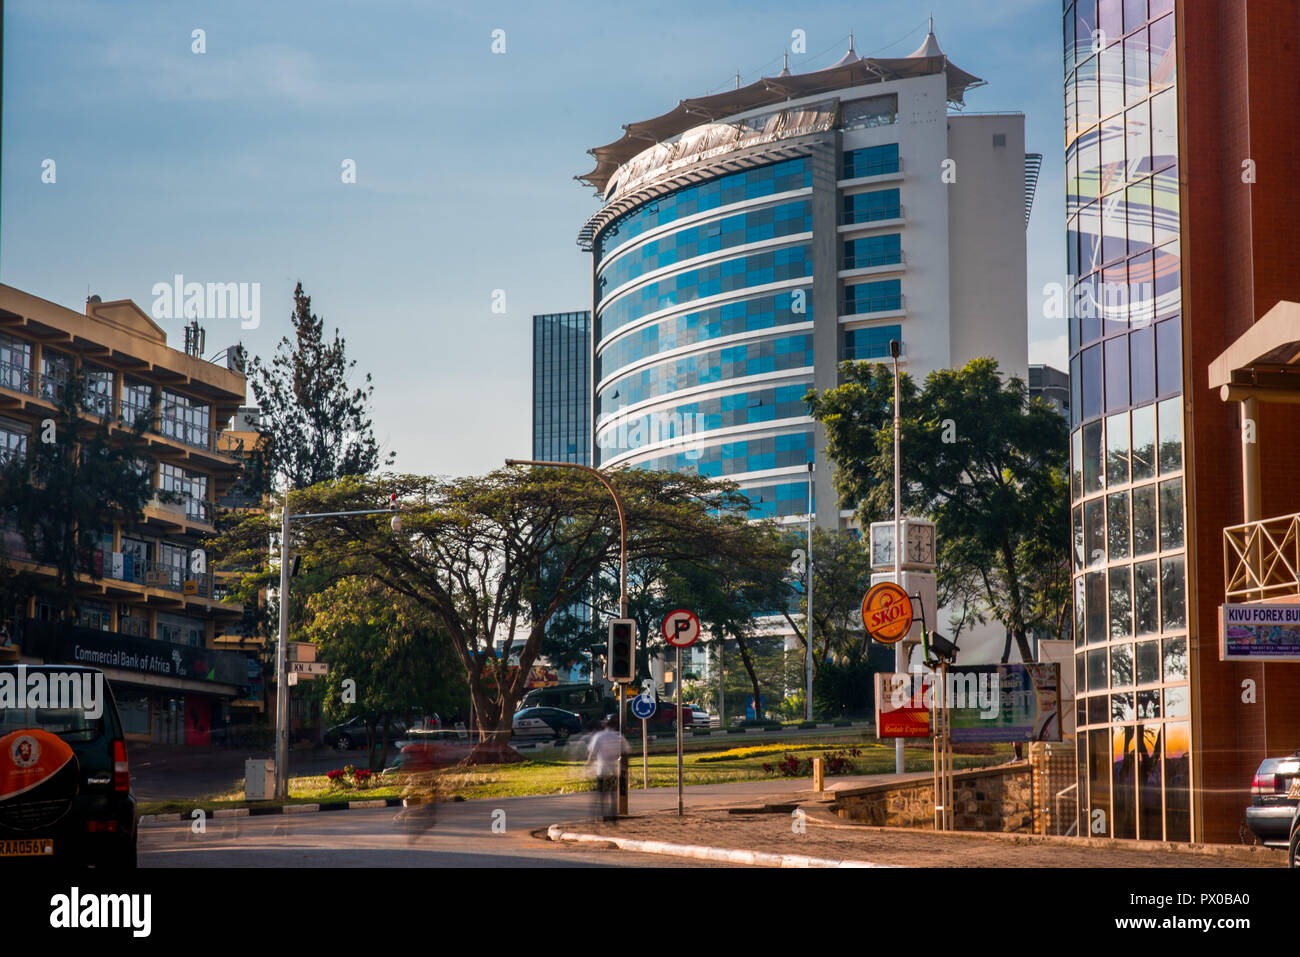 Kigali, Rwanda - September 21, 2018: Ubumwe Grande Hotel viewed from street level in the city centre Stock Photo